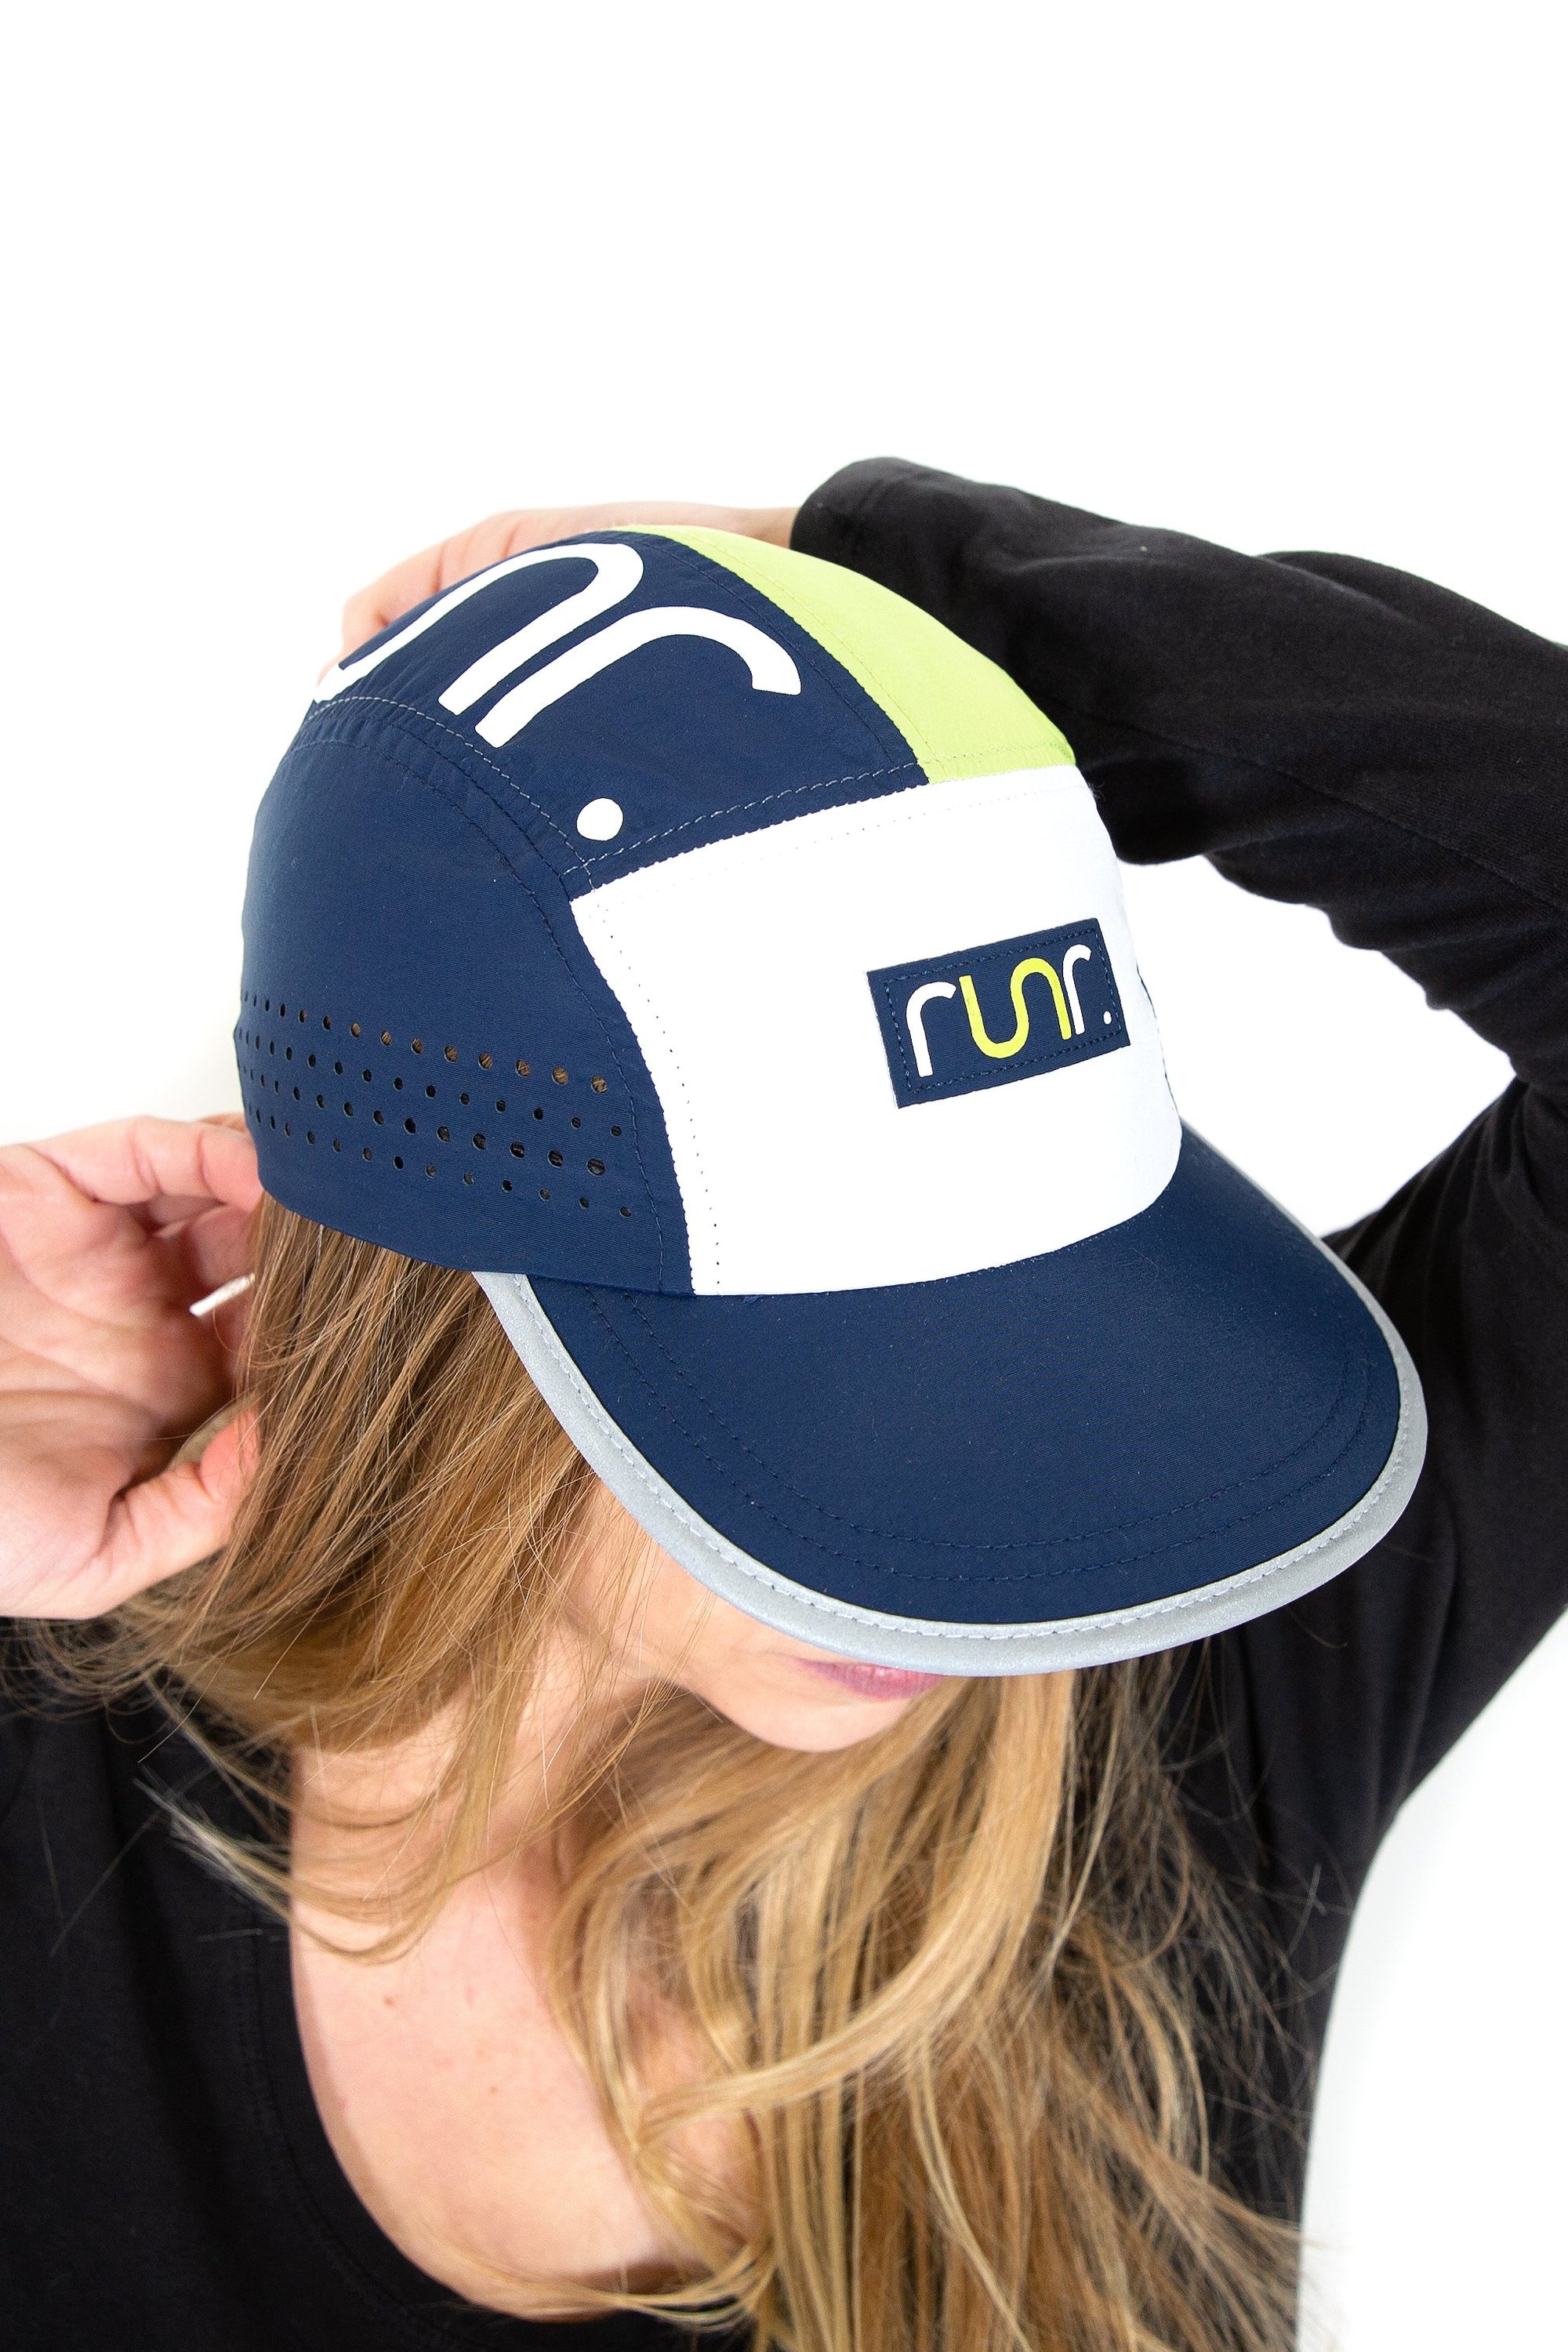 Runr London Technical Running Hat